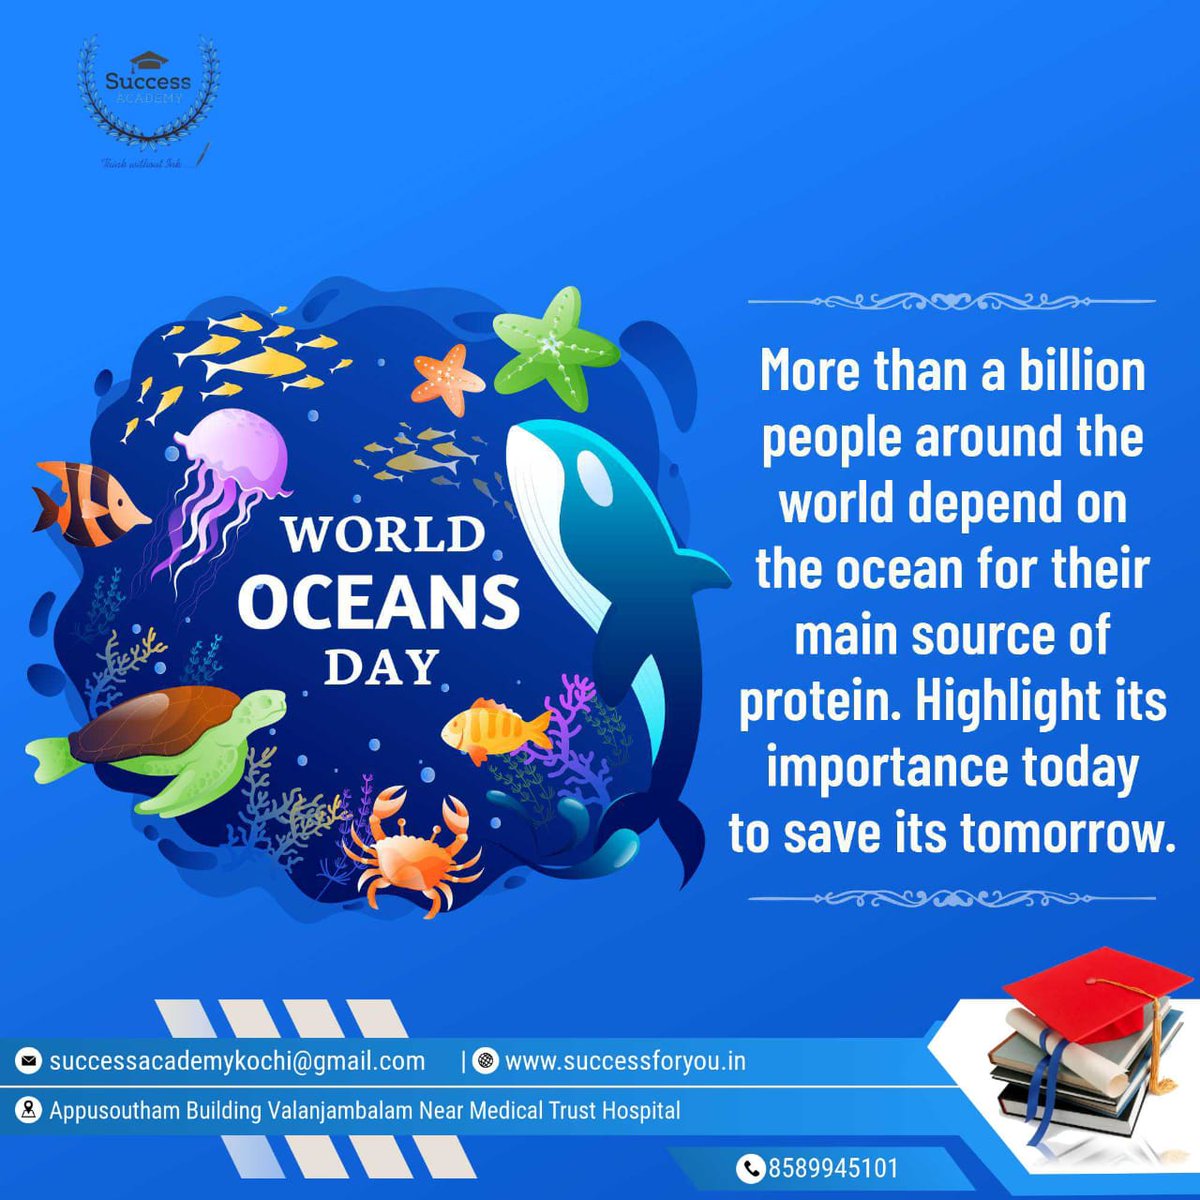 #WorldOceanDay #ProtectOurOceans #OceanConservation #SaveOurSeas #BluePlanet #HealthyOceans #OceanAwareness #CleanSeas #MarineLife #SustainableOceans #OceanLove #OceanPreservation #OceanHeroes #ProtectMarineLife #OceansMatter  #SSCCoaching #BankCoaching #SuccessAcademyKochi